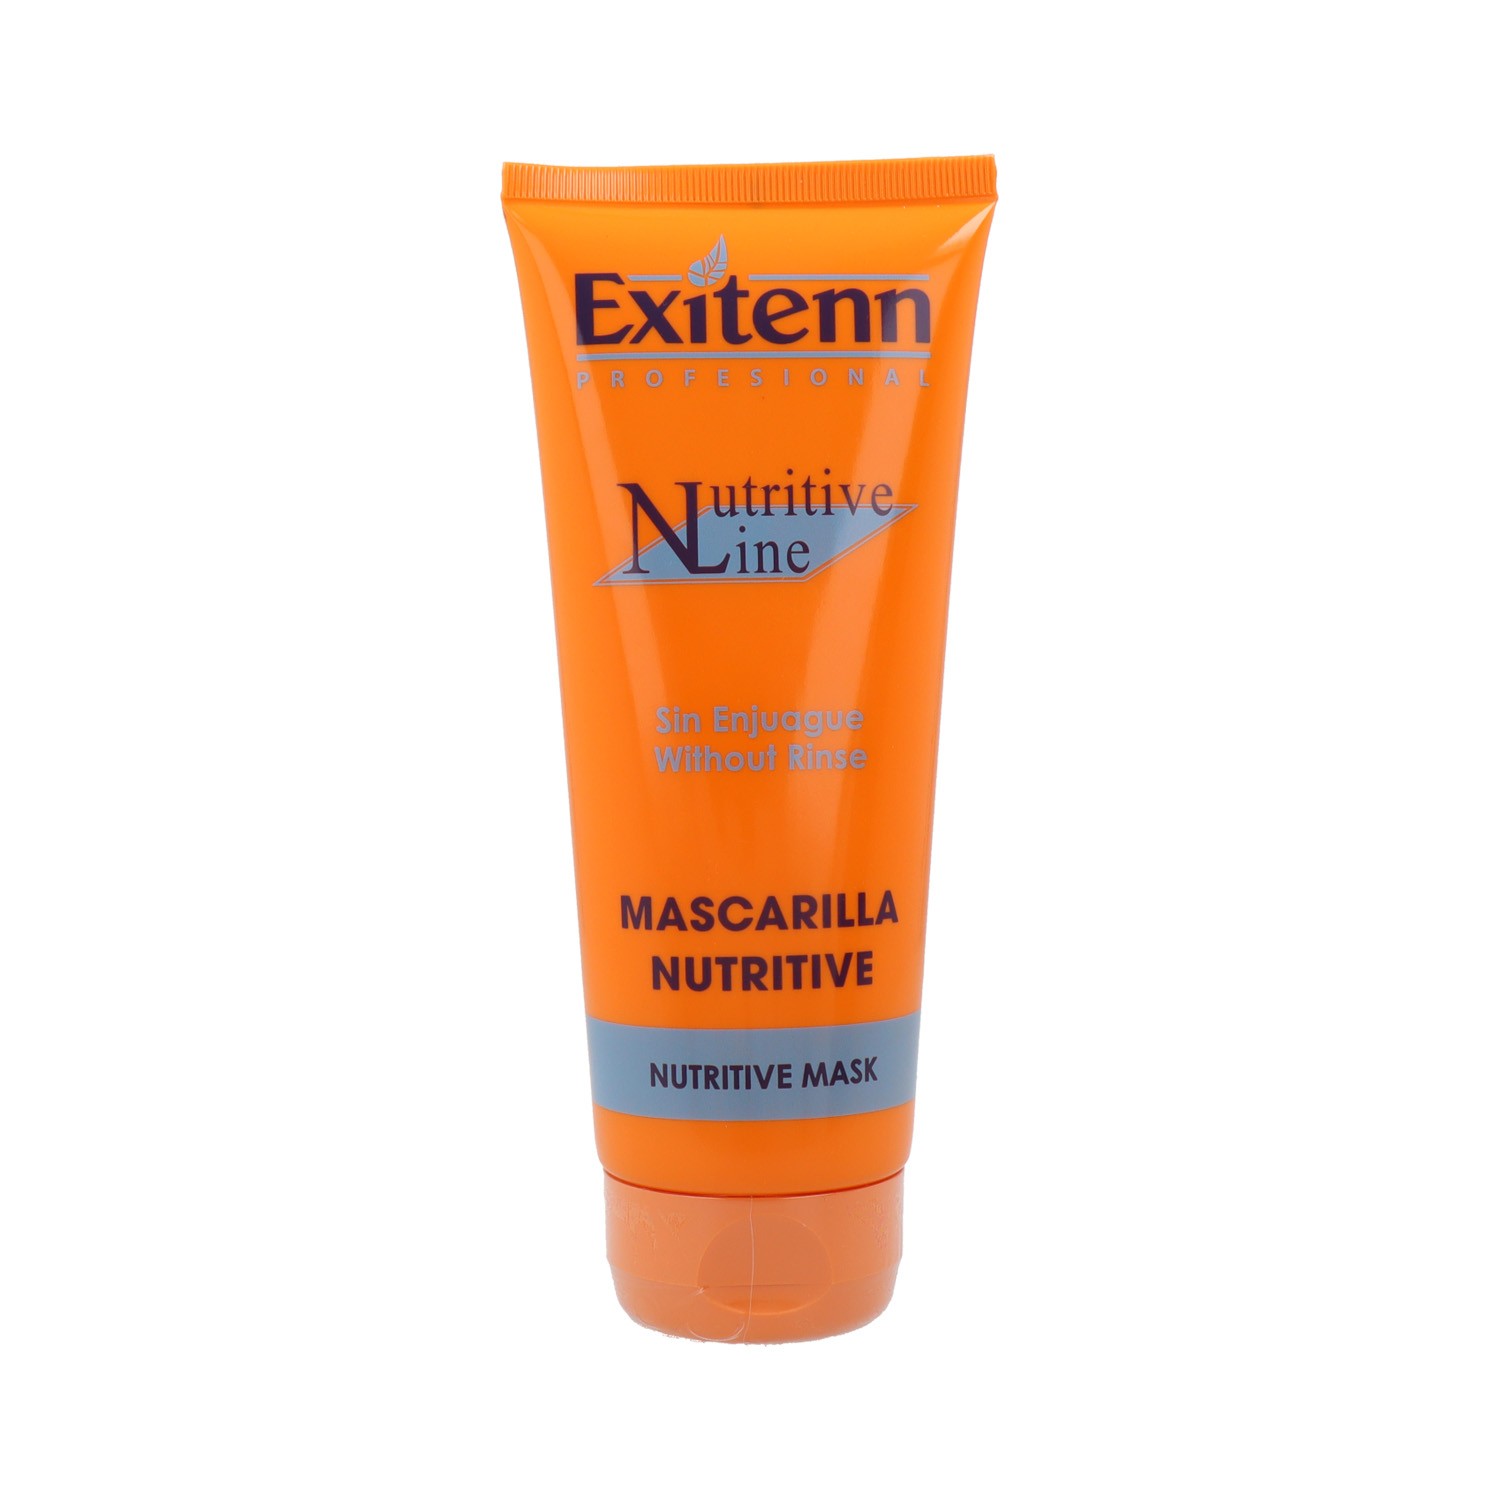 Exitenn - Exitenn nutritive sin aclarado mascarilla 200 ml, mascarilla nutritiva sin aclarado. Belleza y cuidado de tu cabello y tu piel con Exitenn.